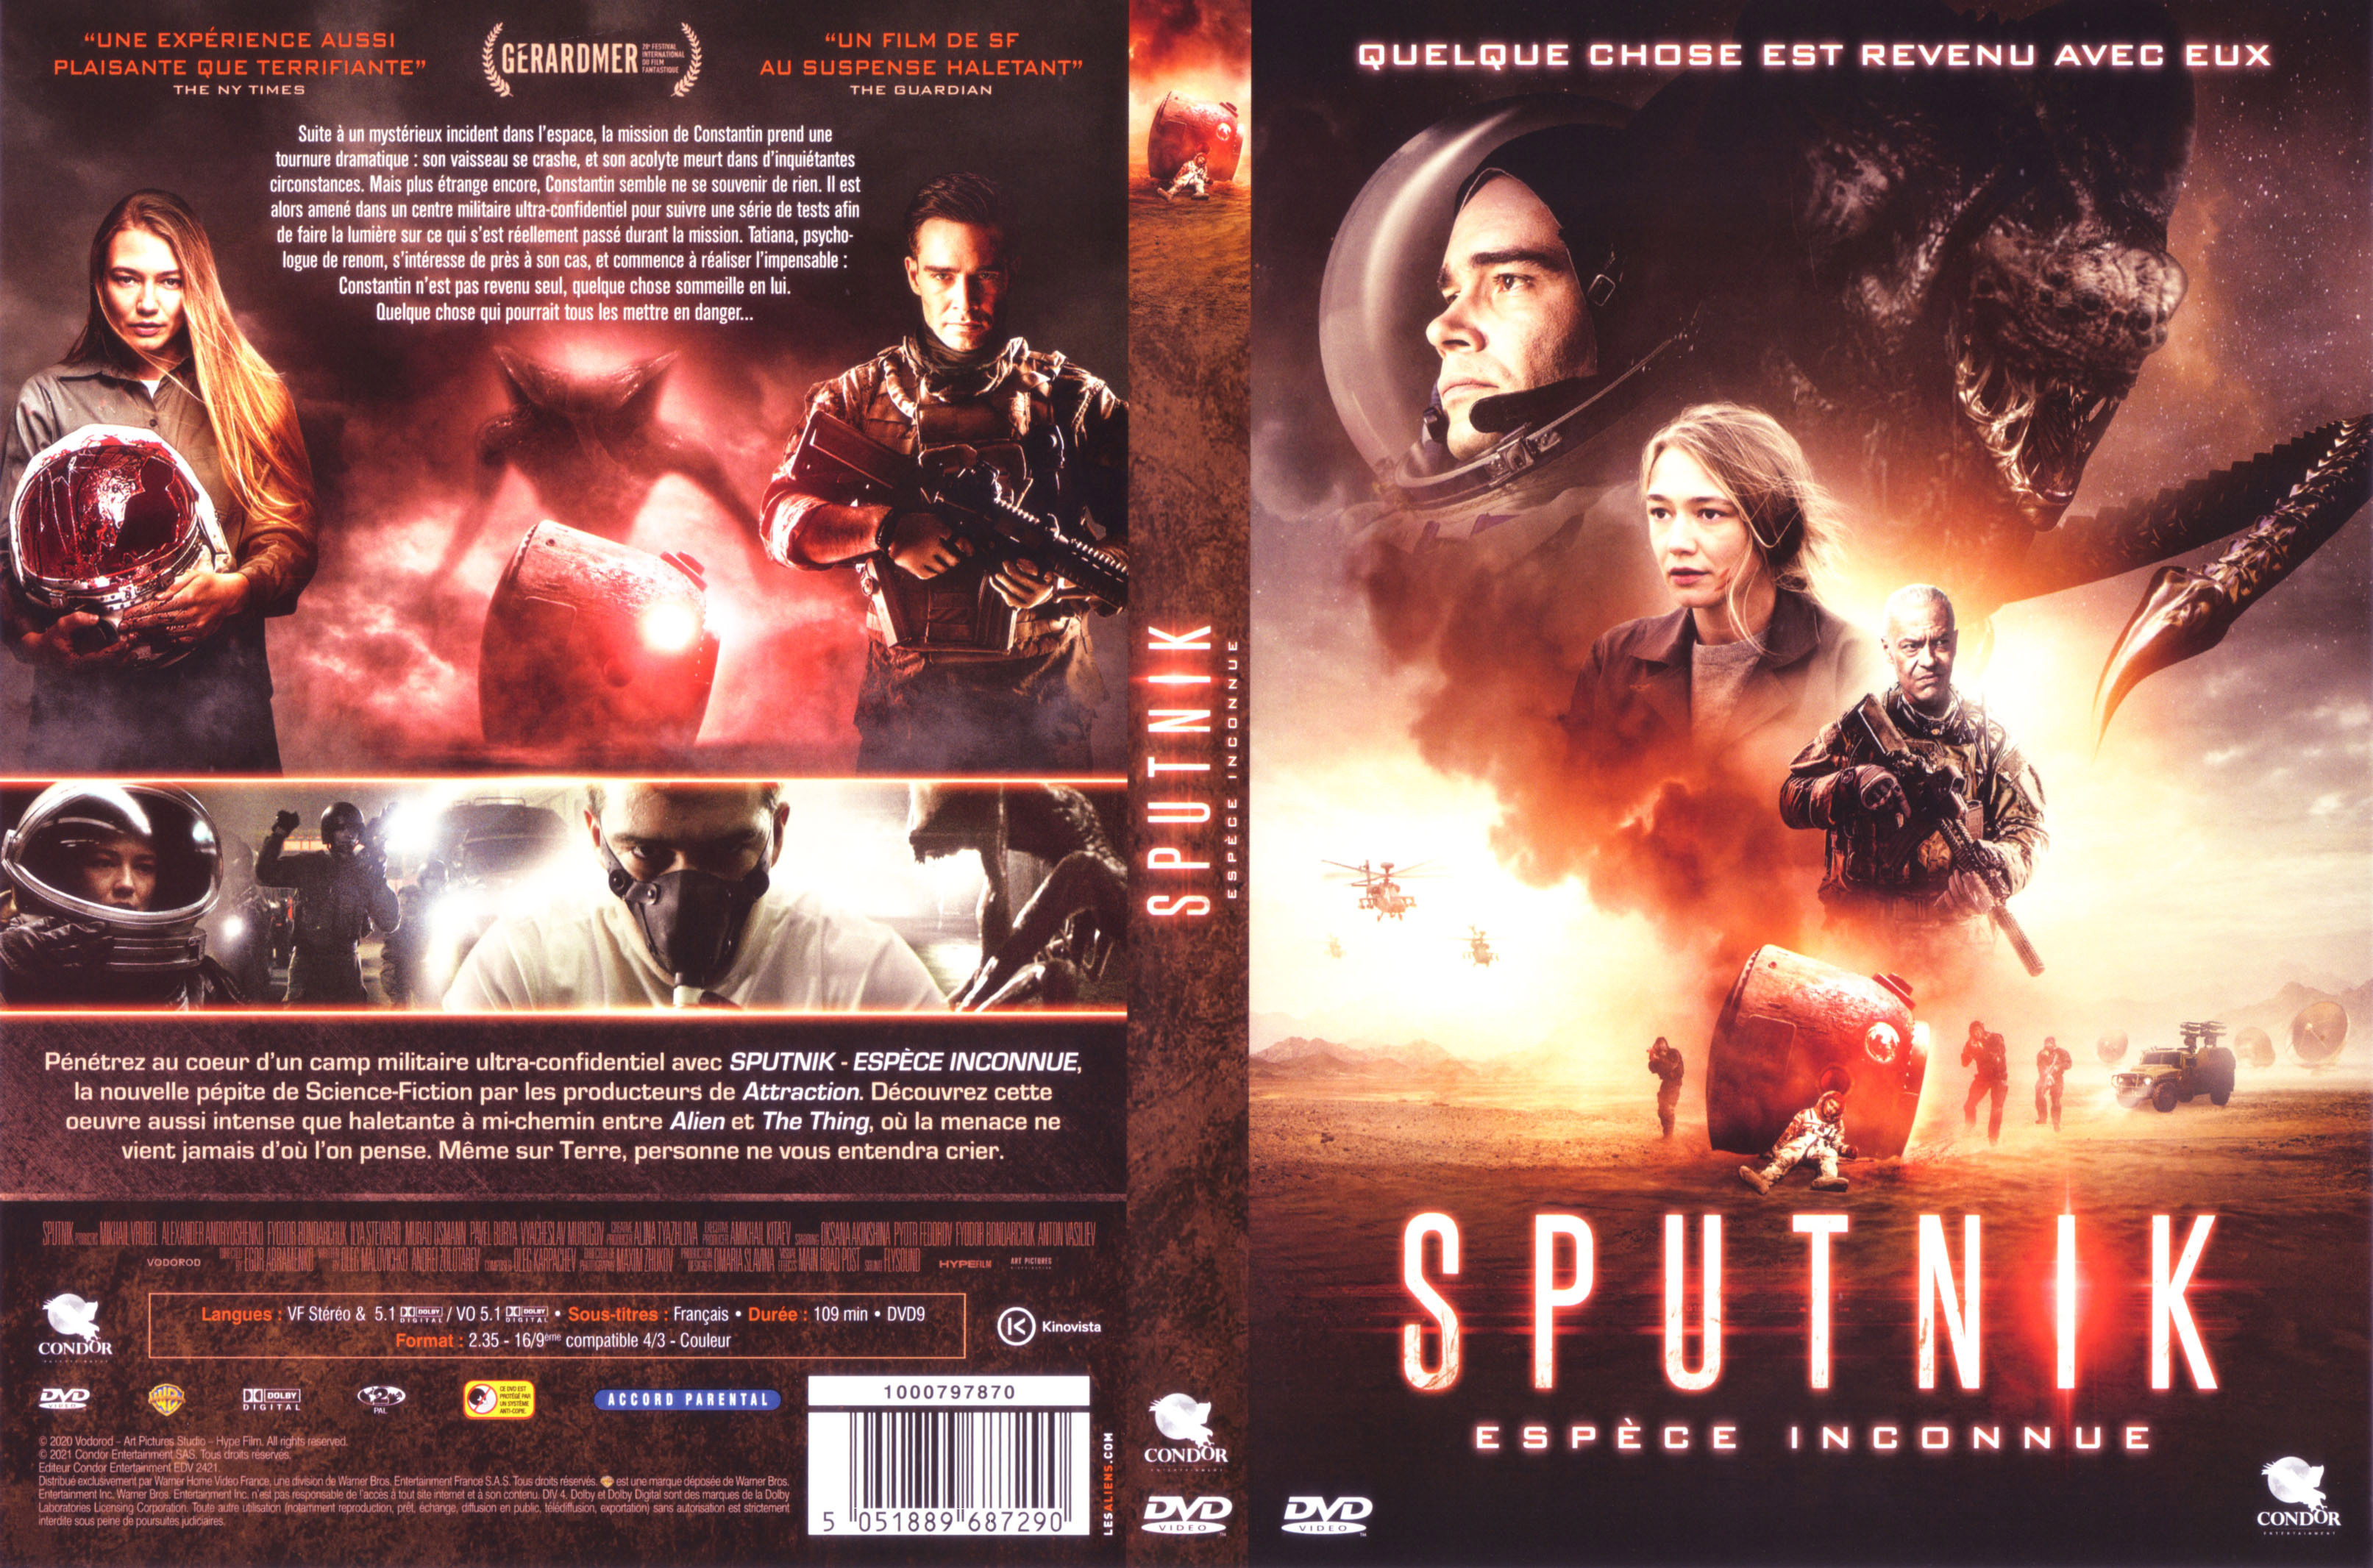 Jaquette DVD Sputnik, espce inconnue